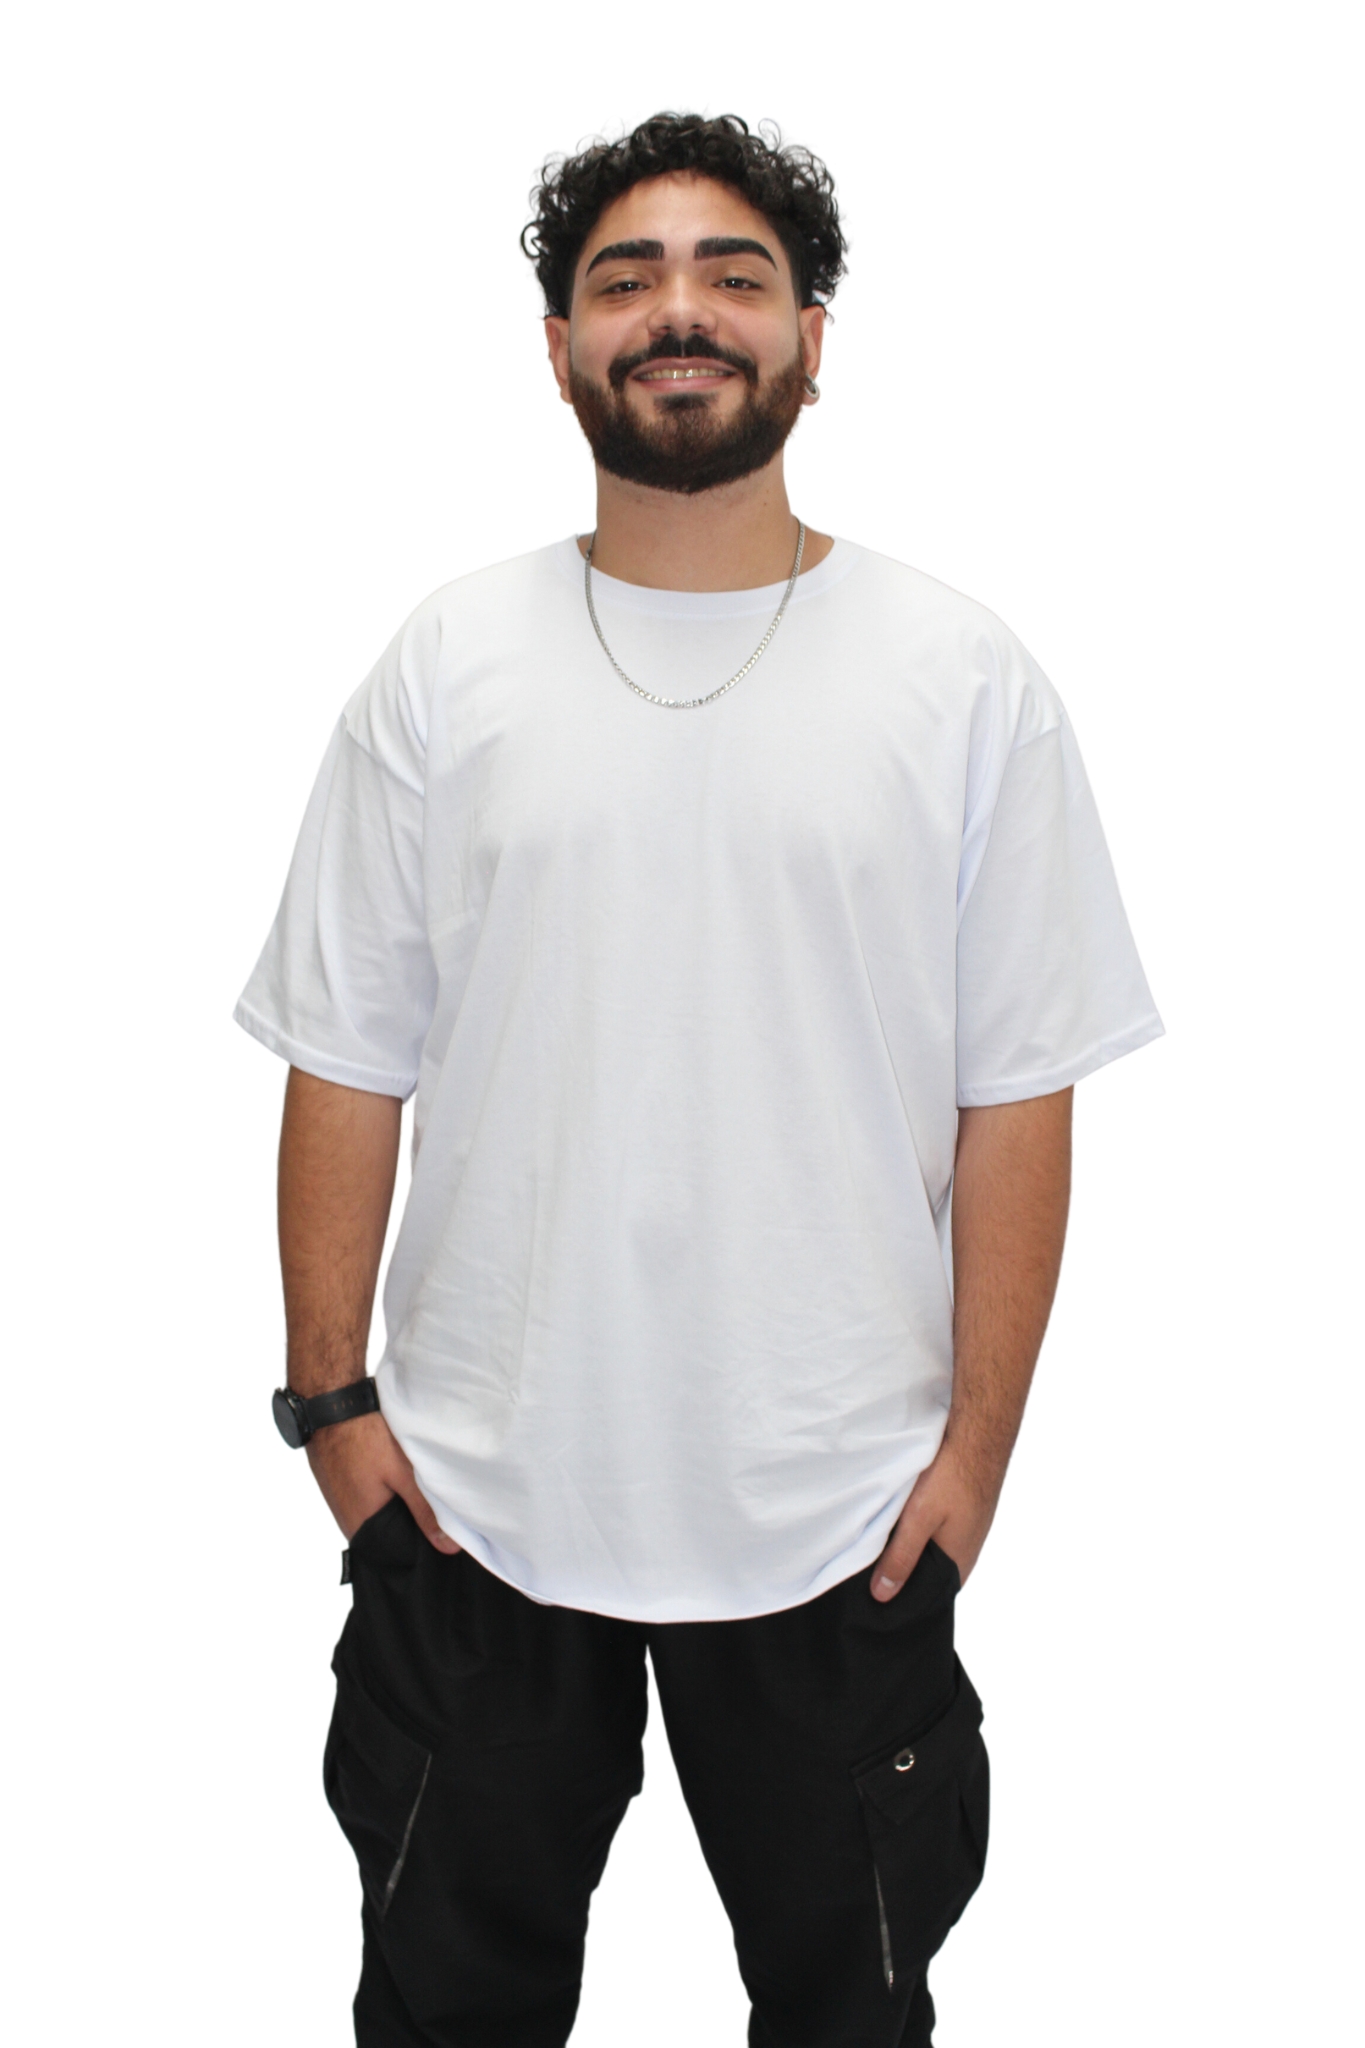 Camiseta Branca Oversized Streetwear 100% Algodão - Camisetas El Elyon